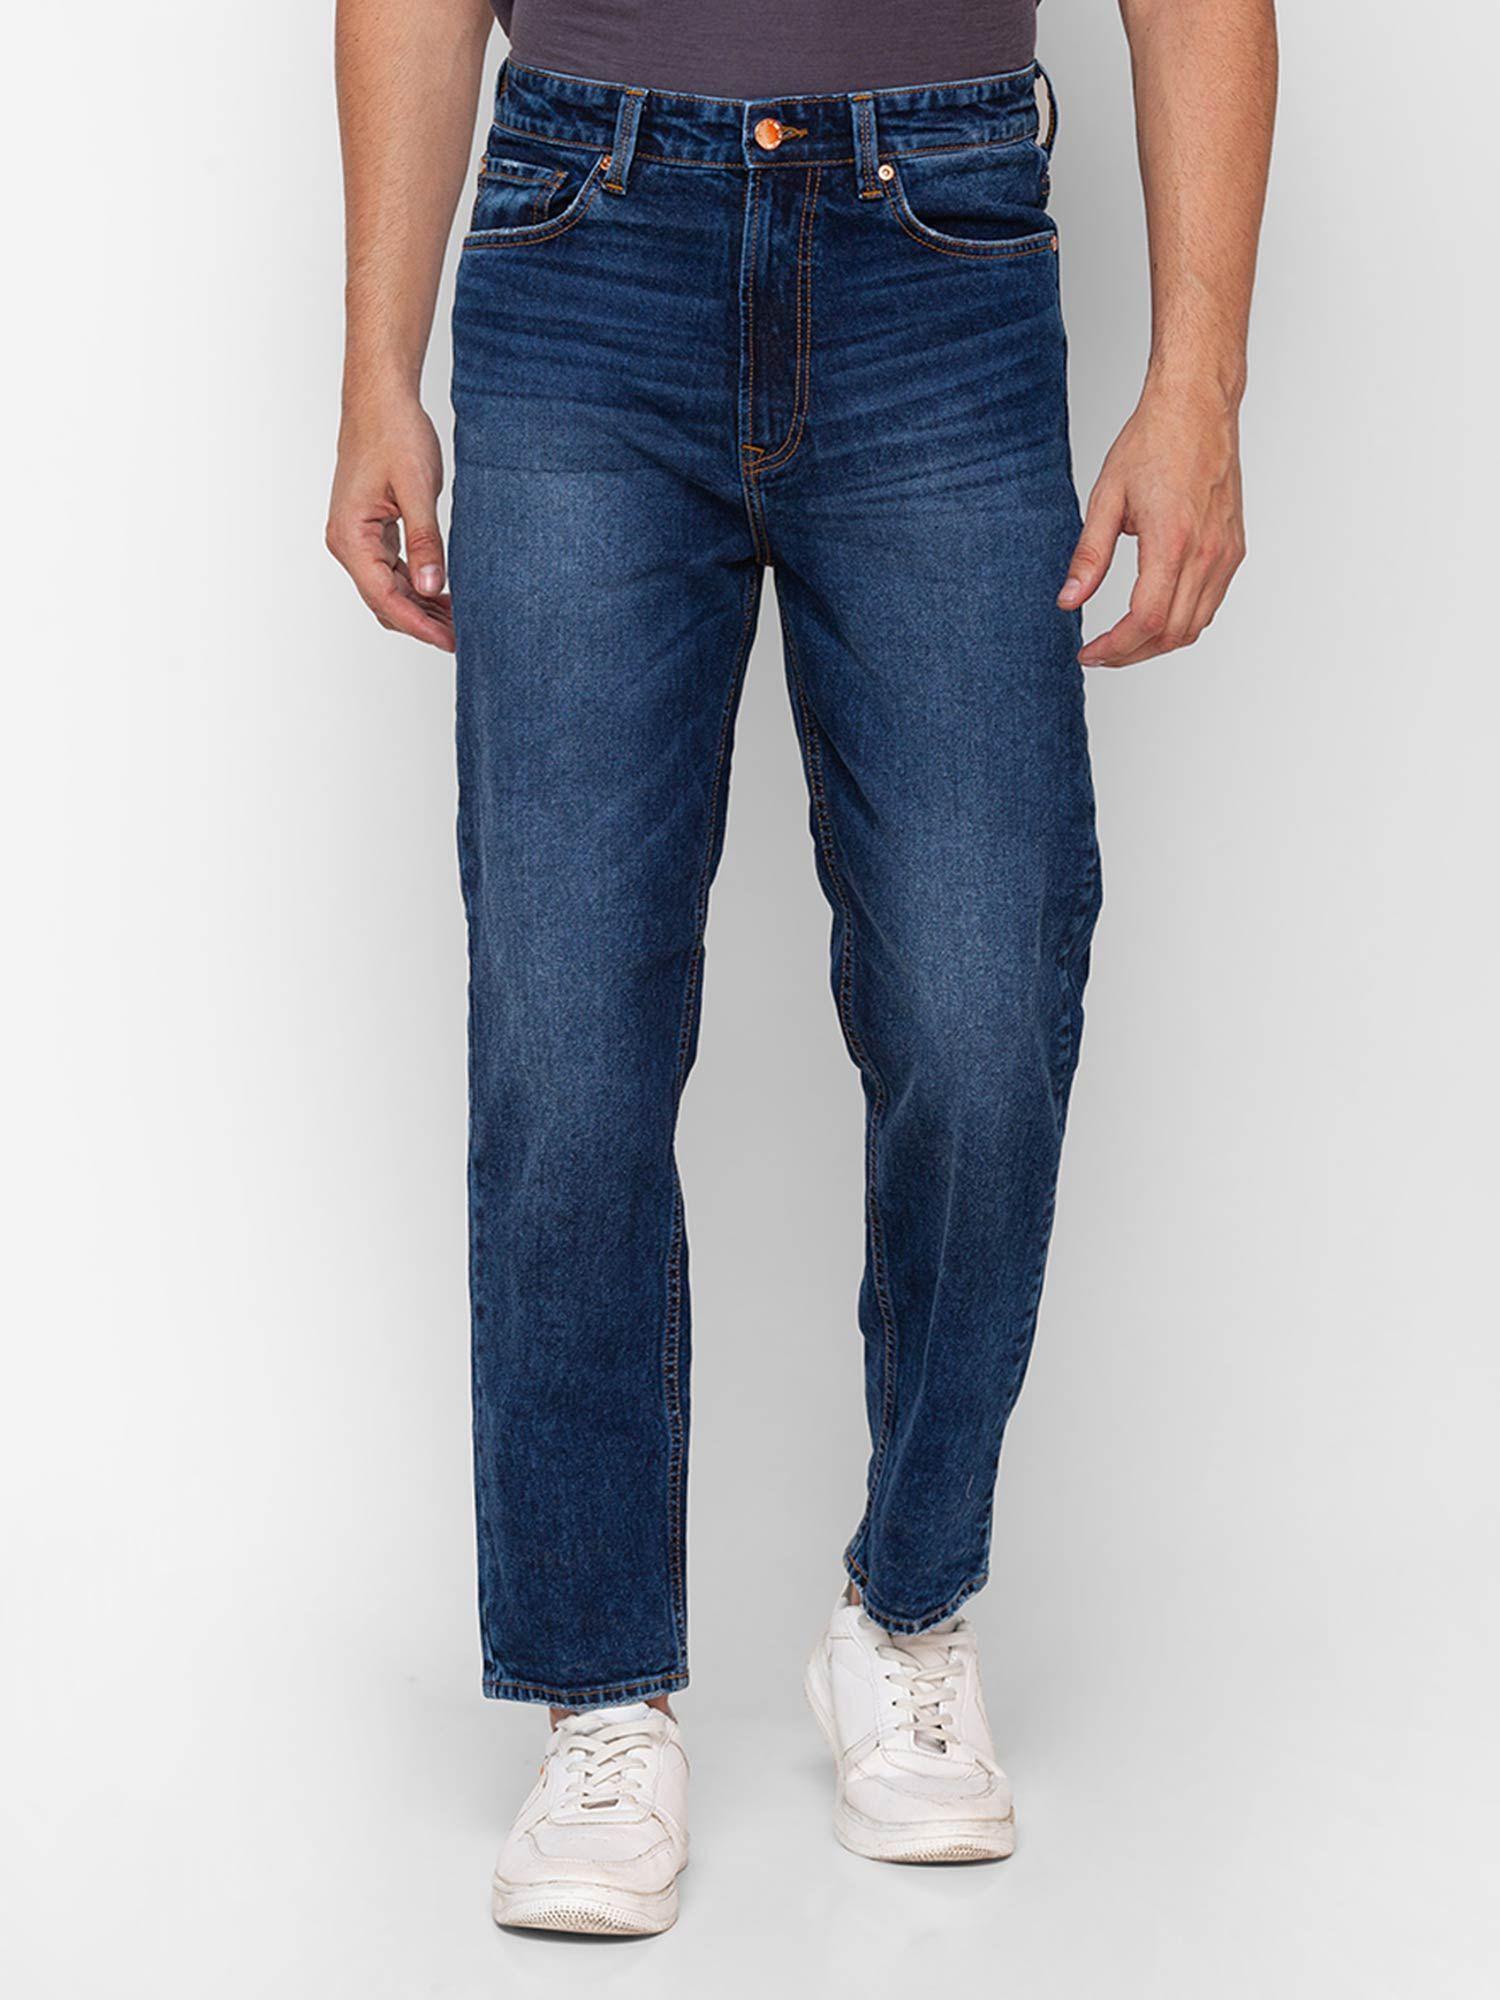 mid blue cotton loose fit regular length jeans for men (renato)